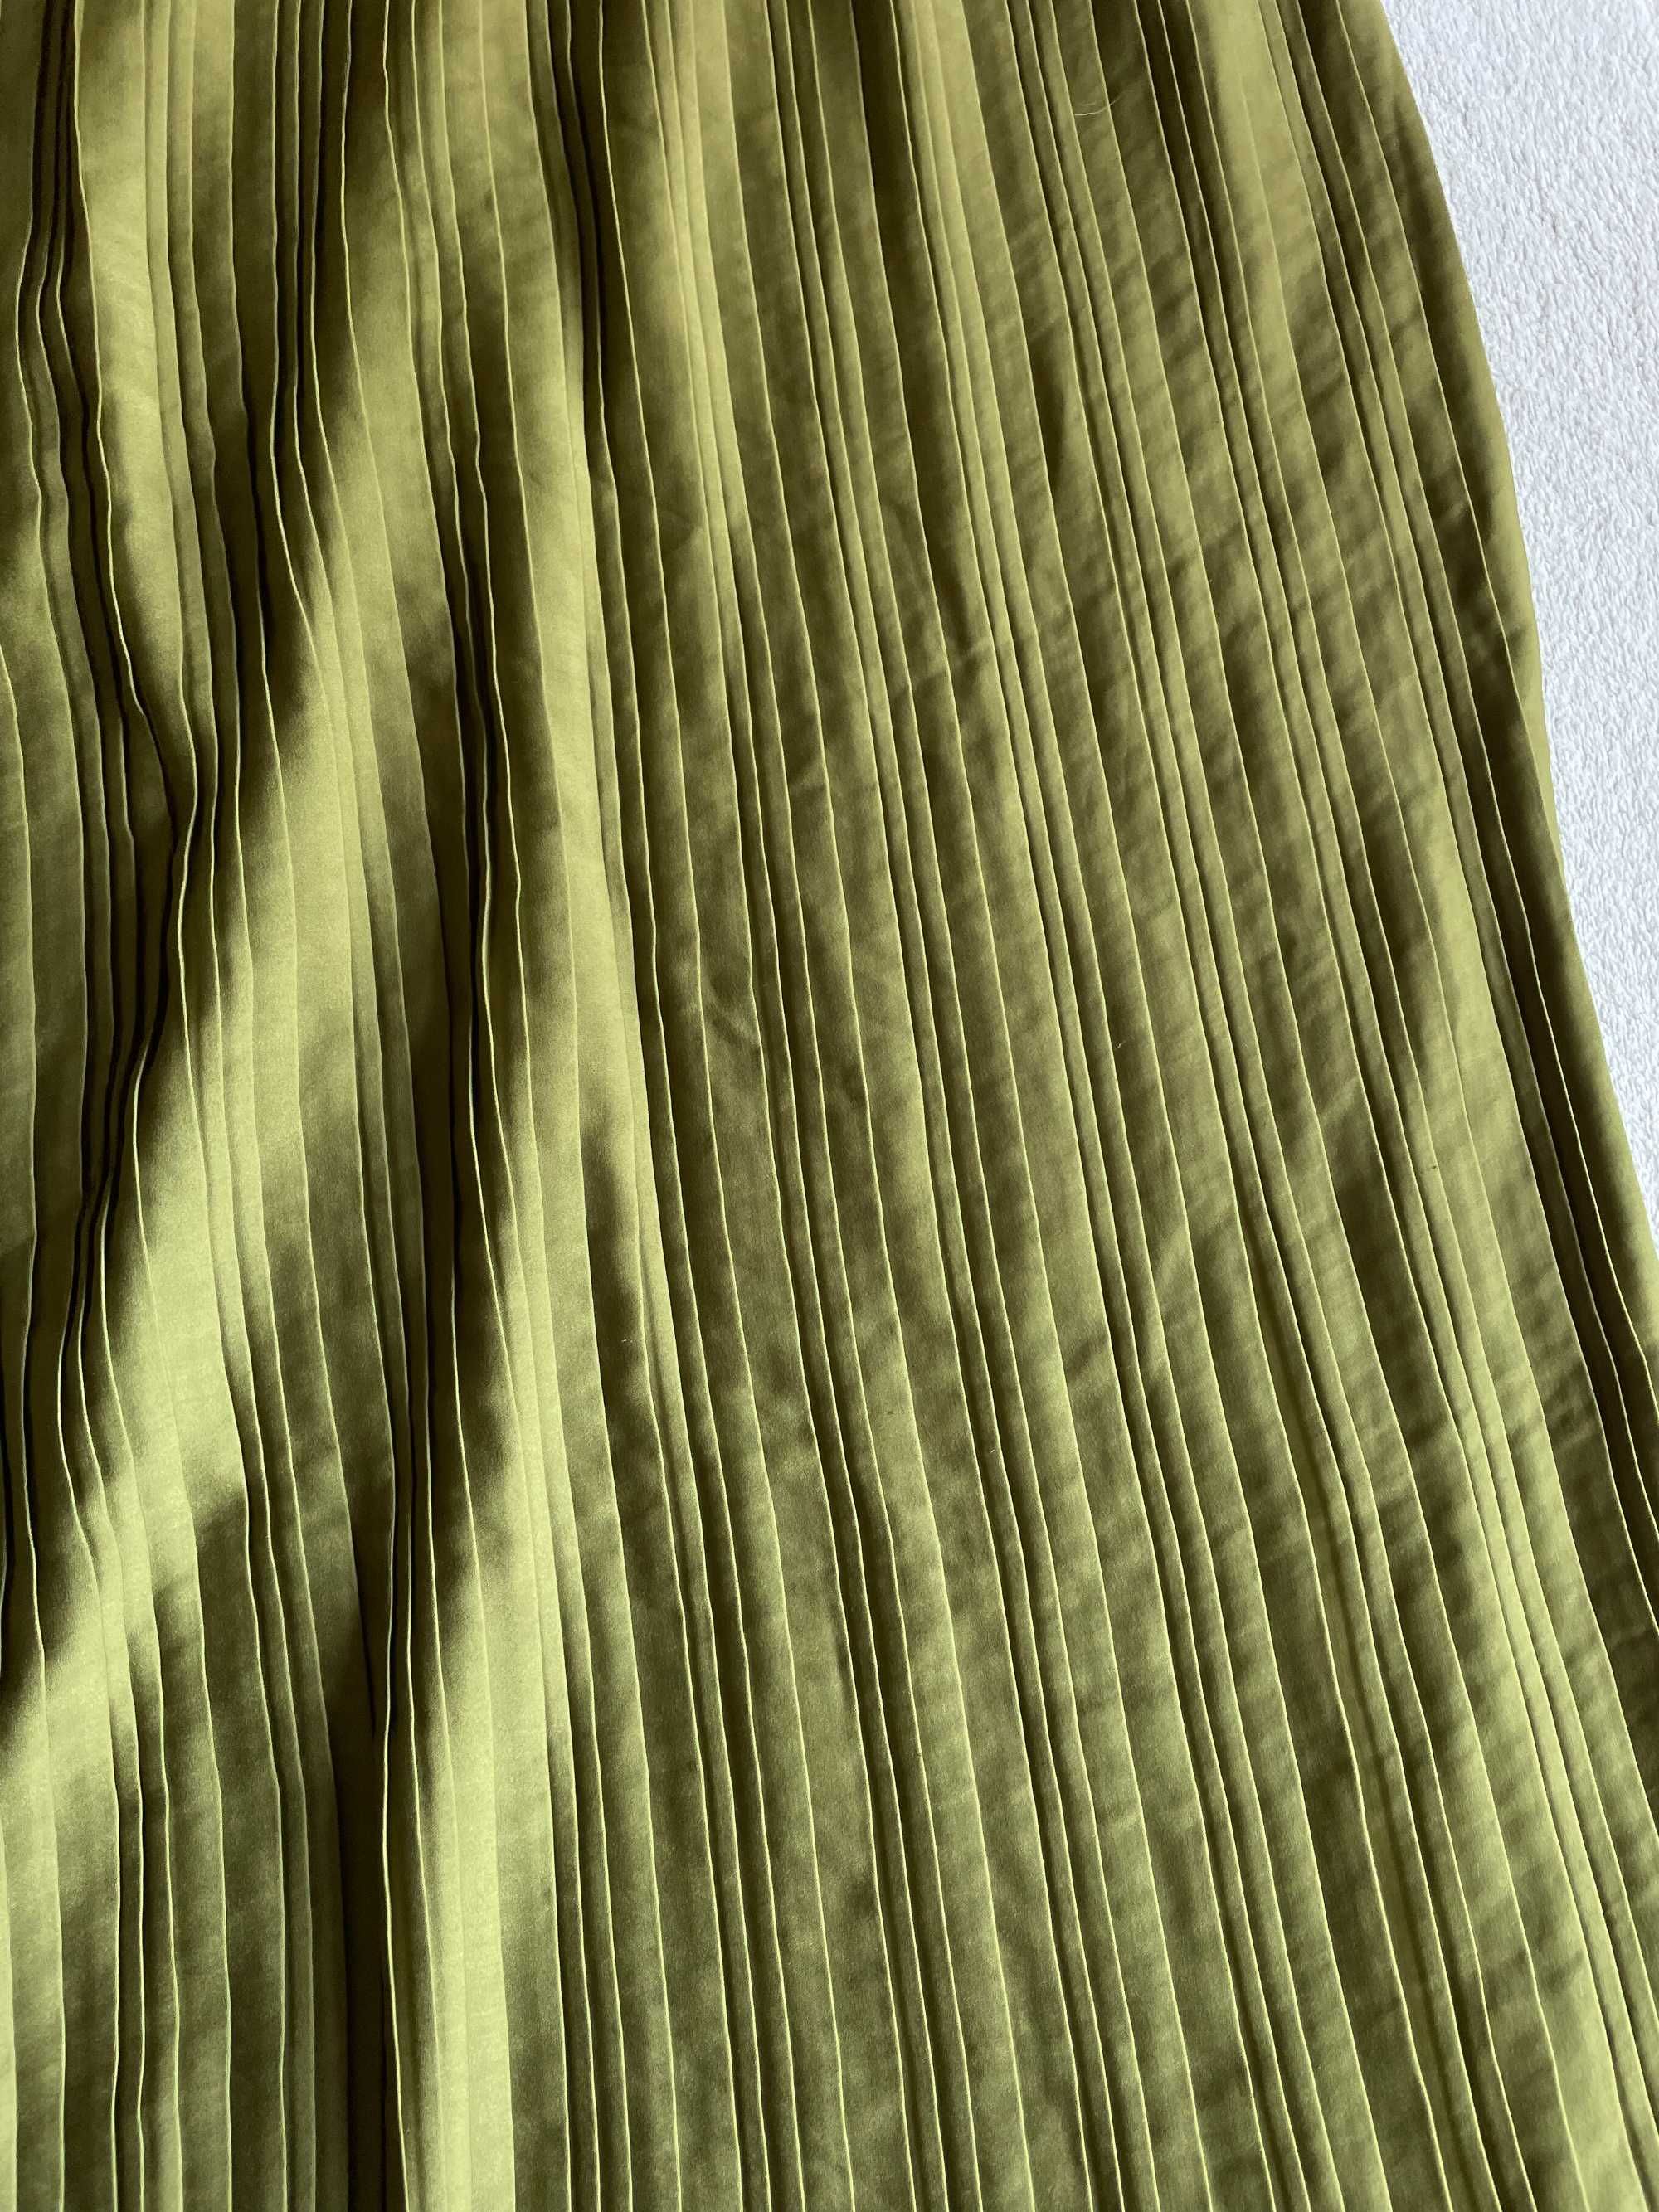 Damska plisowana spódnica zielona C&A XS(34)